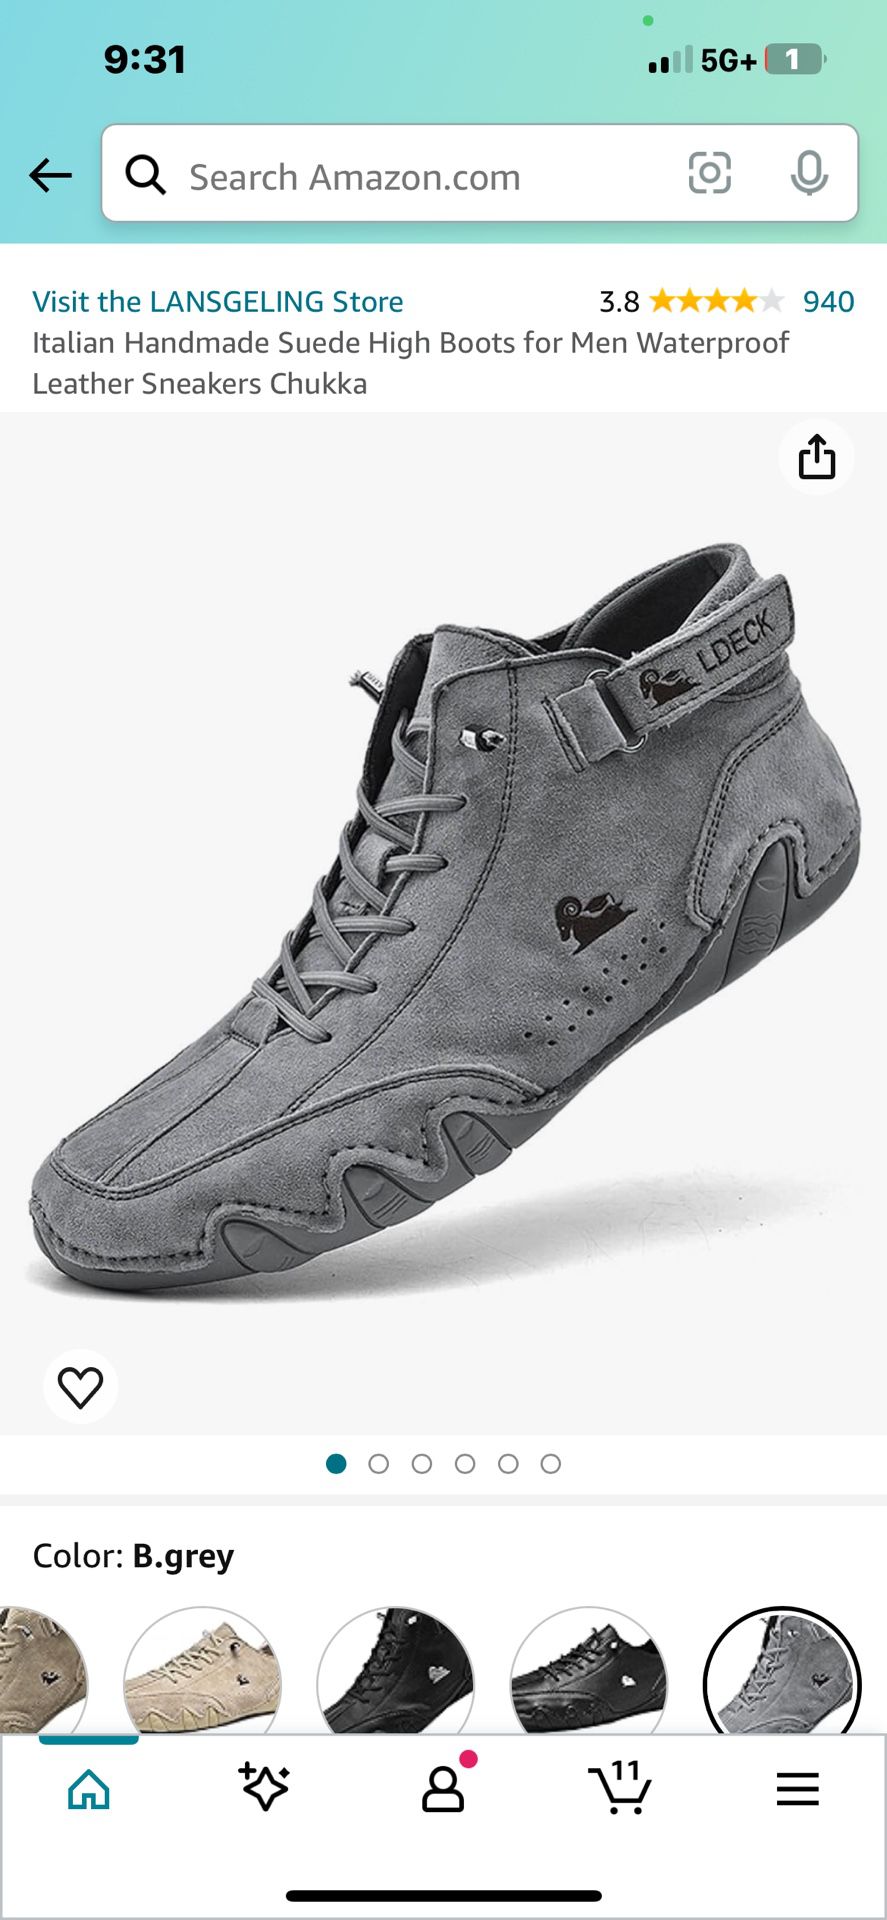 Italian Handmade Suede High Boots for Men Waterproof Leather Sneakers Chukka